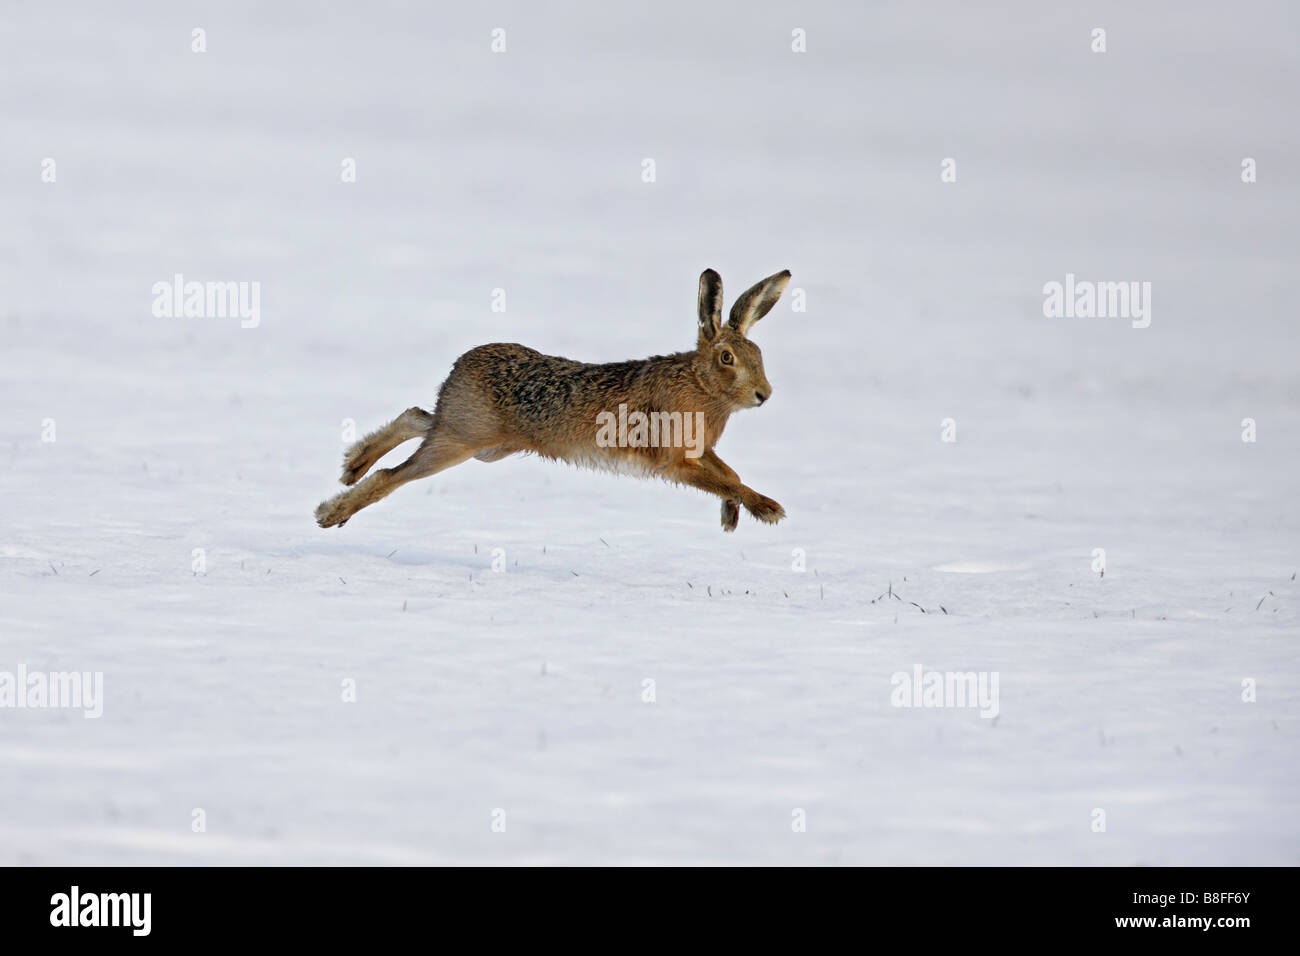 Brown lepre Lepus europaeus in esecuzione nella neve Foto Stock